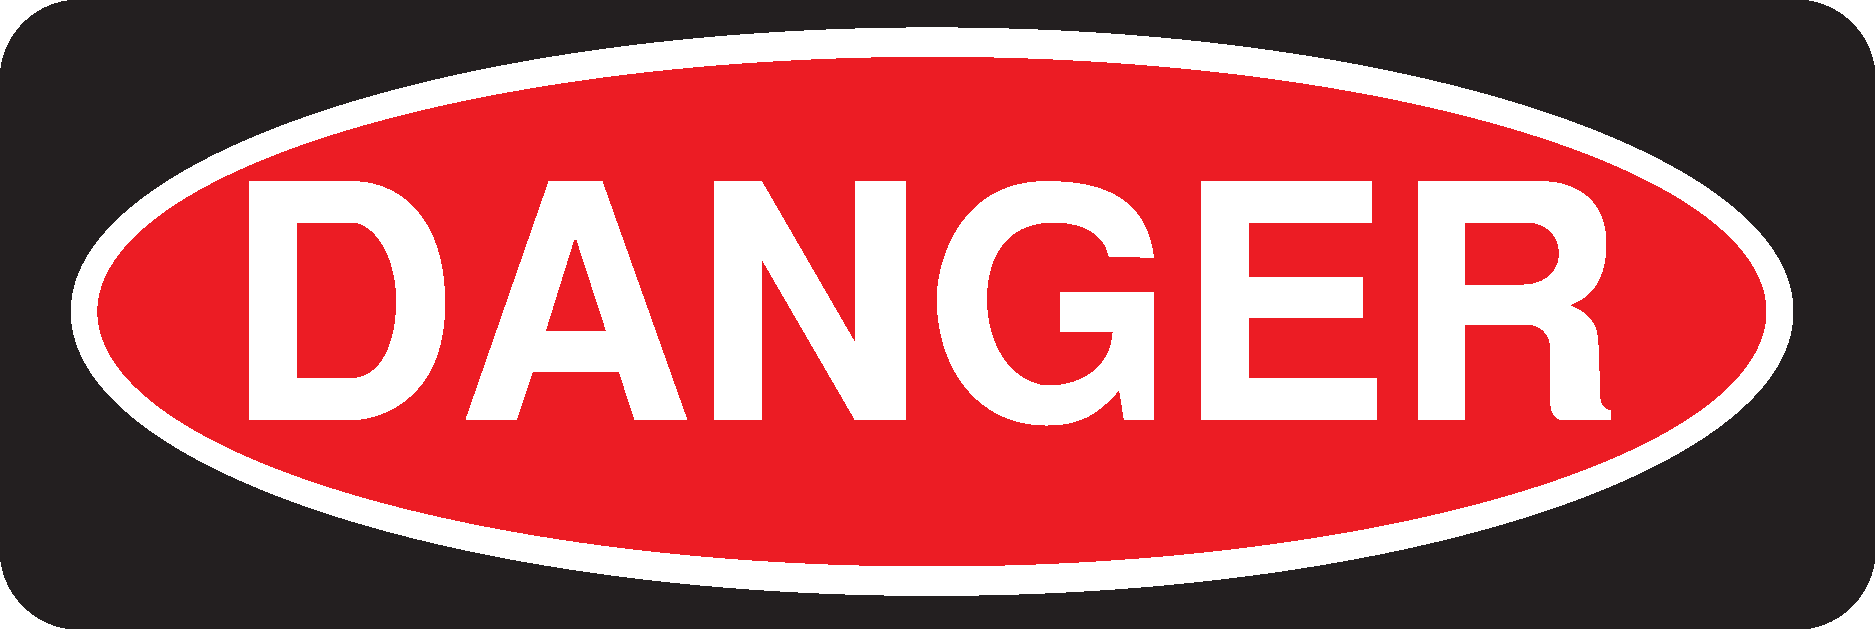 Hazard/Danger Logo Template | PosterMyWall